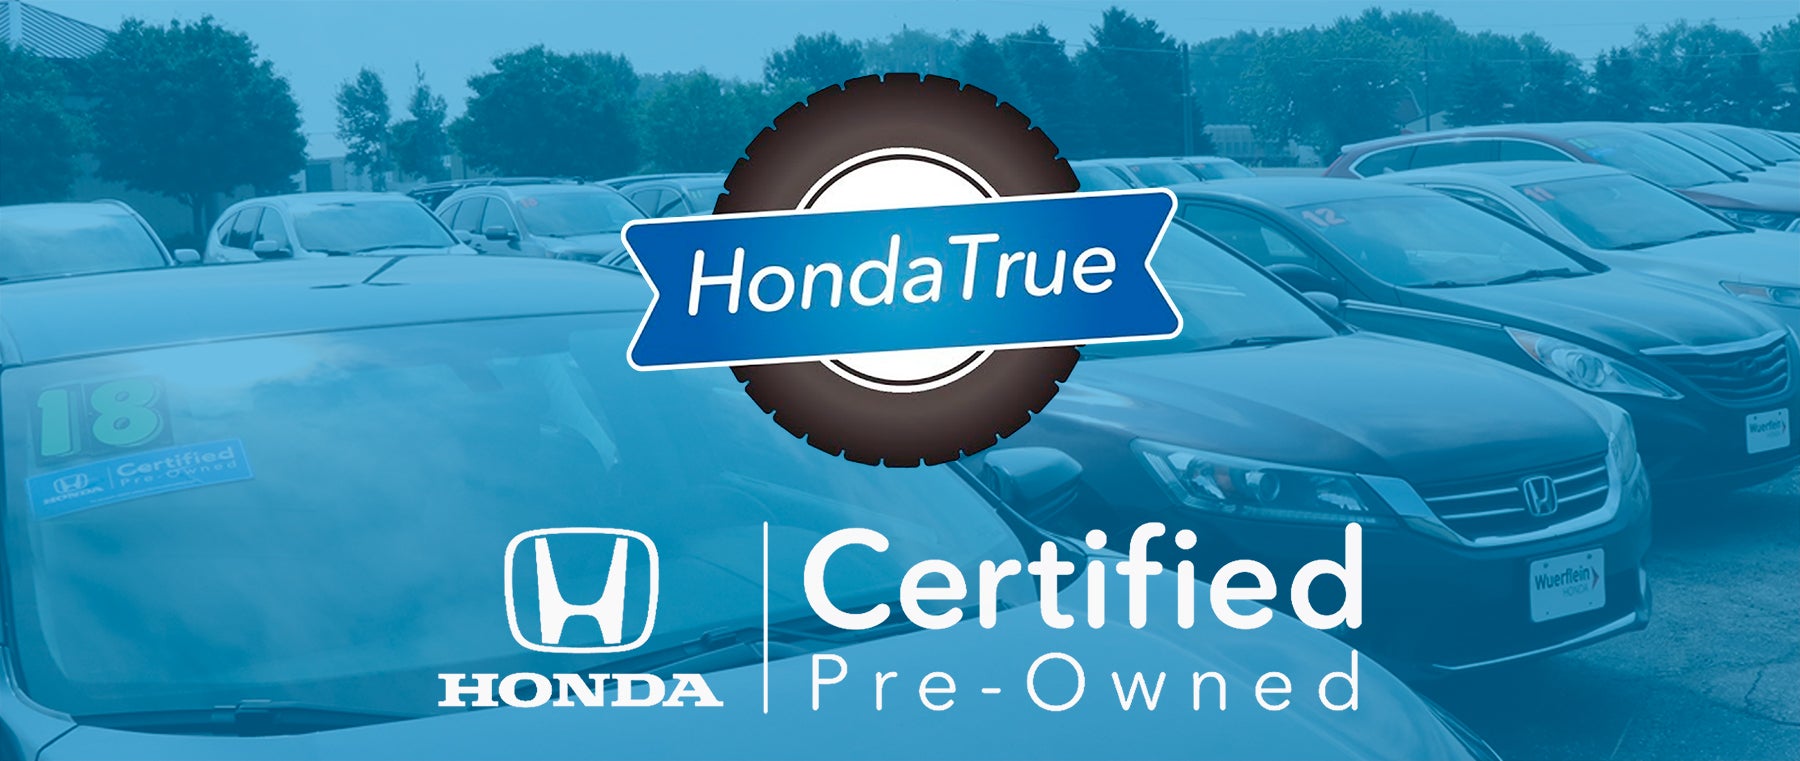 HondaTrue Certified Pre-Owned vehicles at Wuerflein Honda in Albert Lea, MN